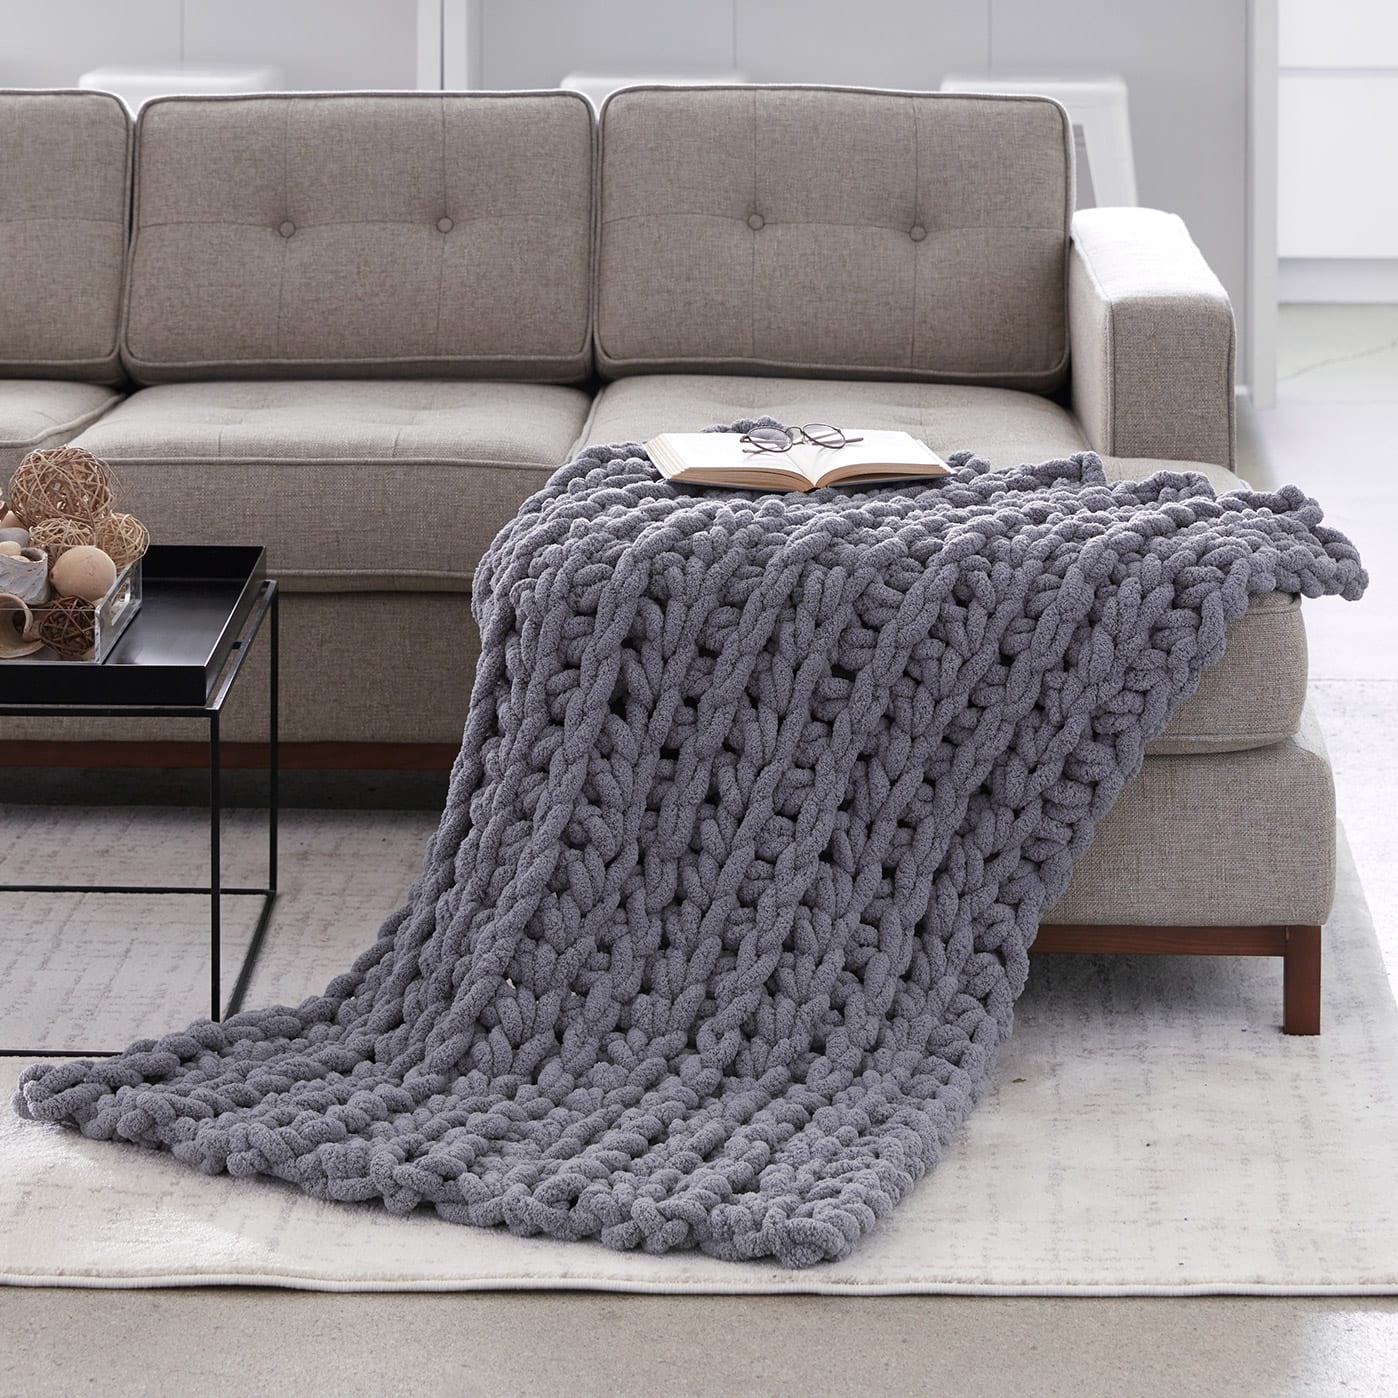 Bernat Blanket Yarn - Details & Crochet Patterns